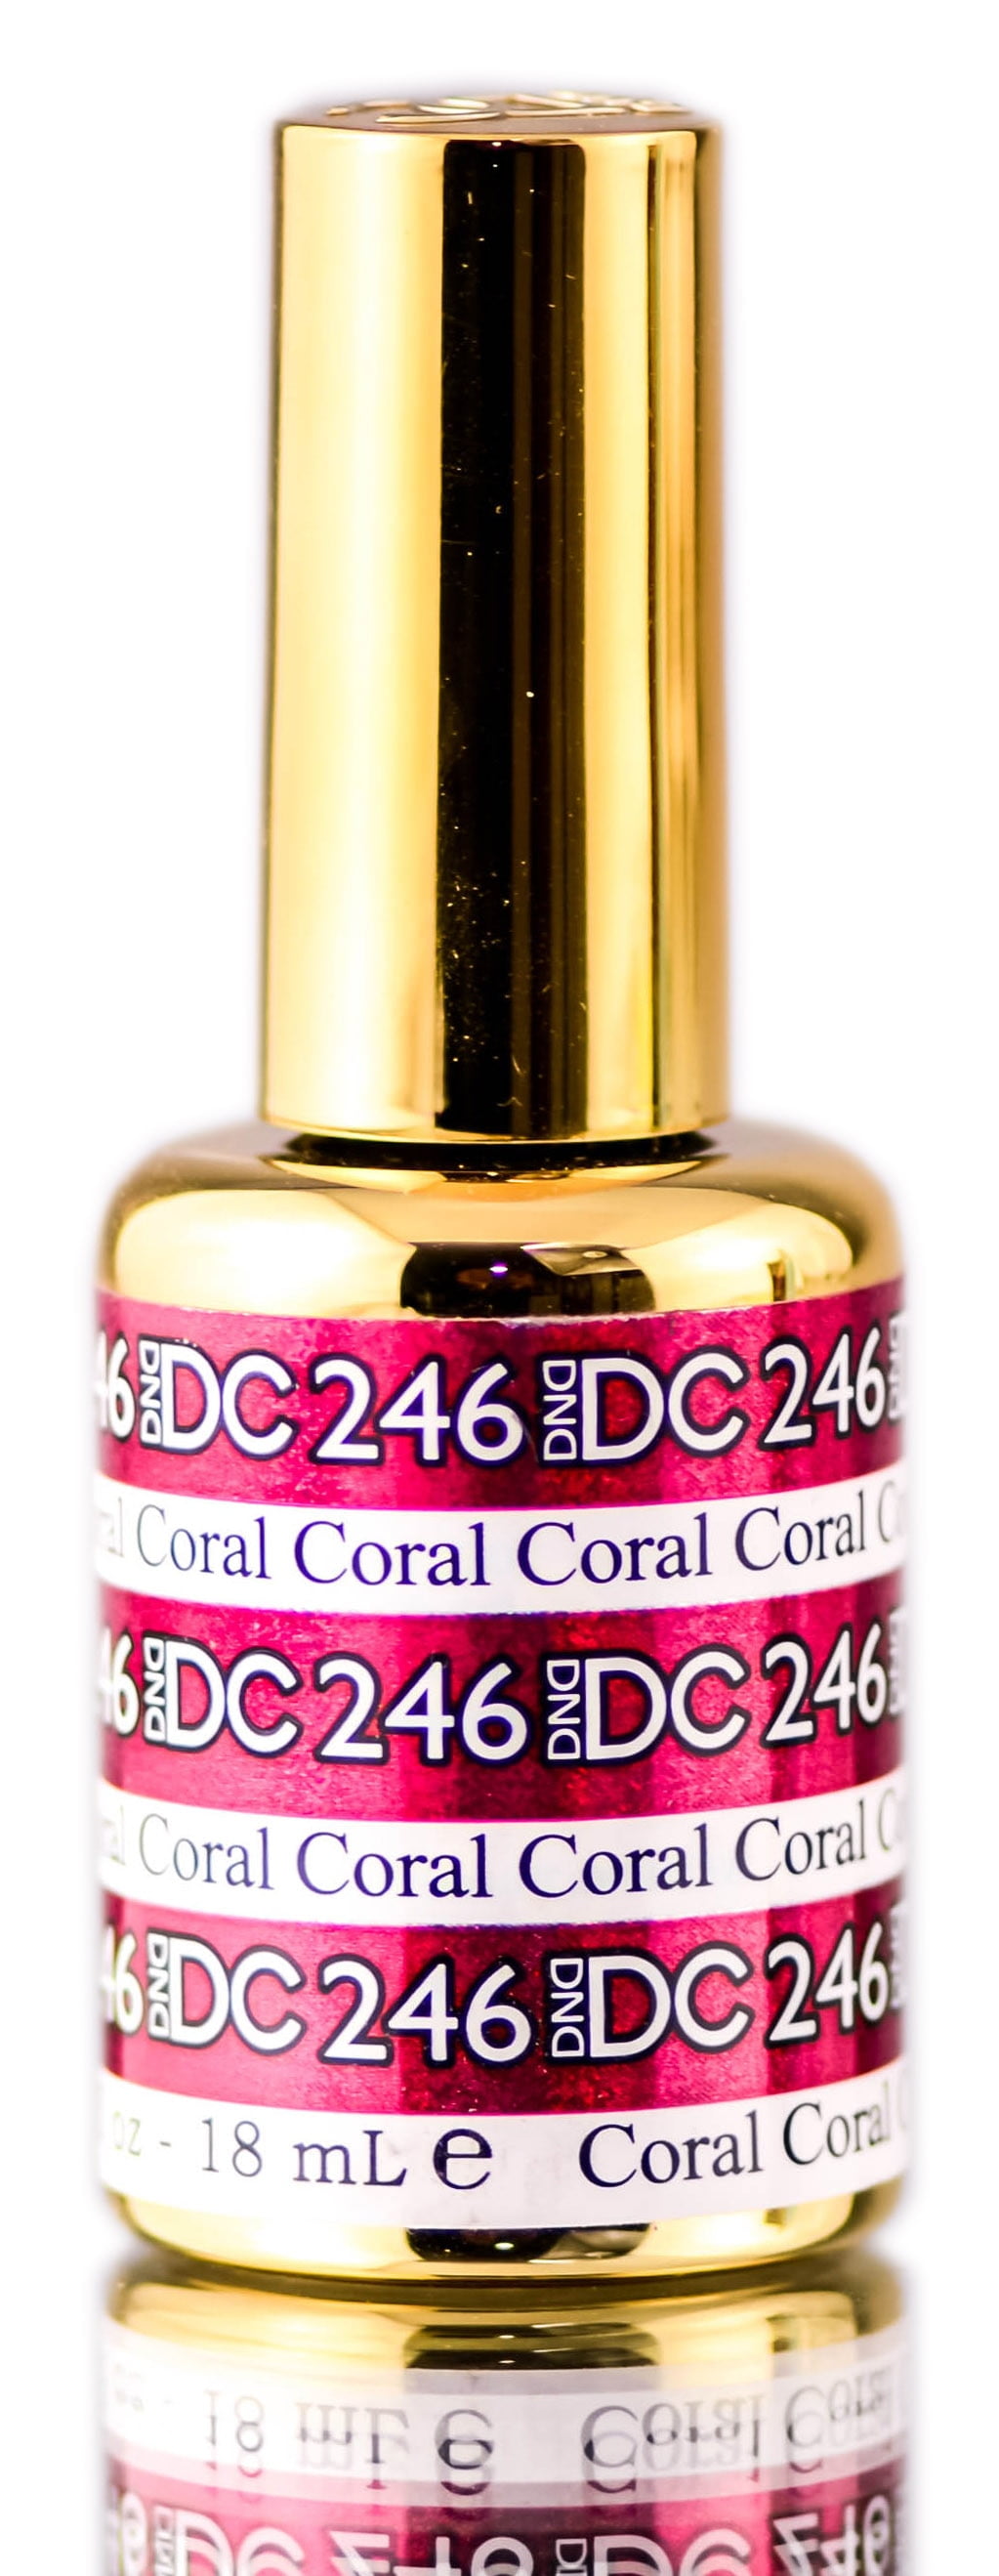 DND DC MERMAID Gel Polish, Premium Soak-Off Nail Polish with Aquatic ...